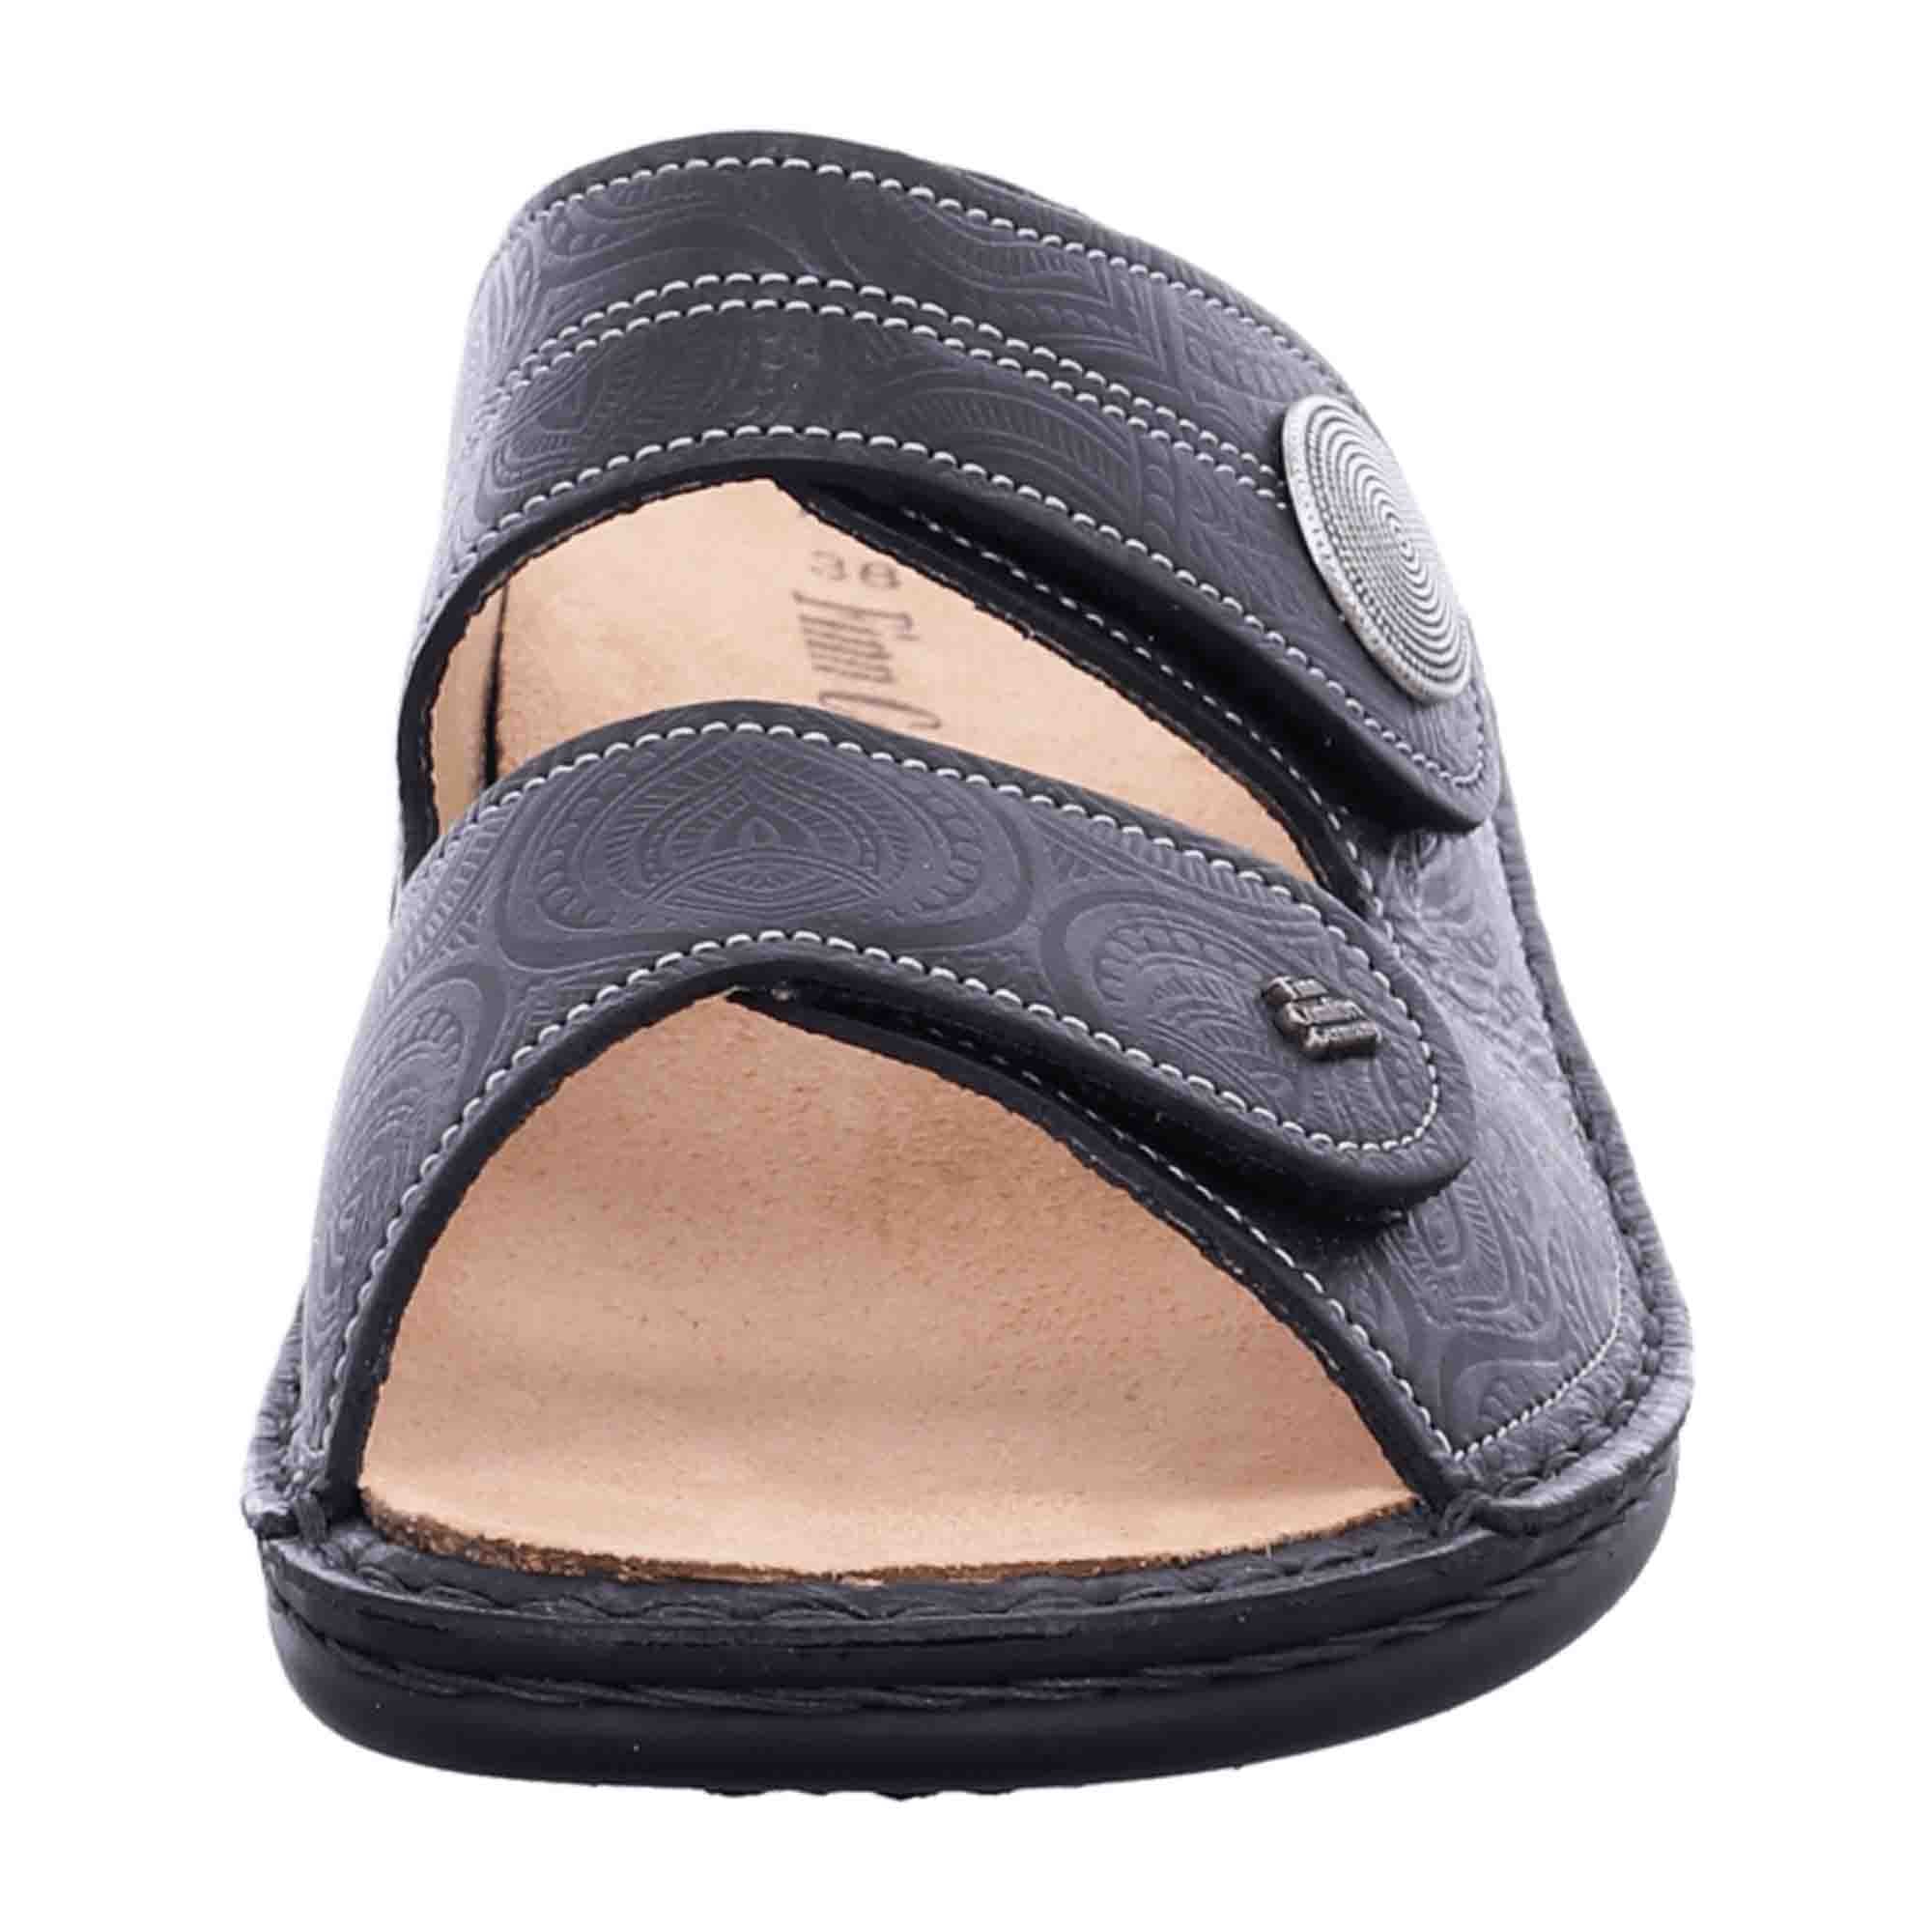 Finn Comfort Sansibar Women's Slides - Black Leather Comfort Sandals with Orthopedic Footbed